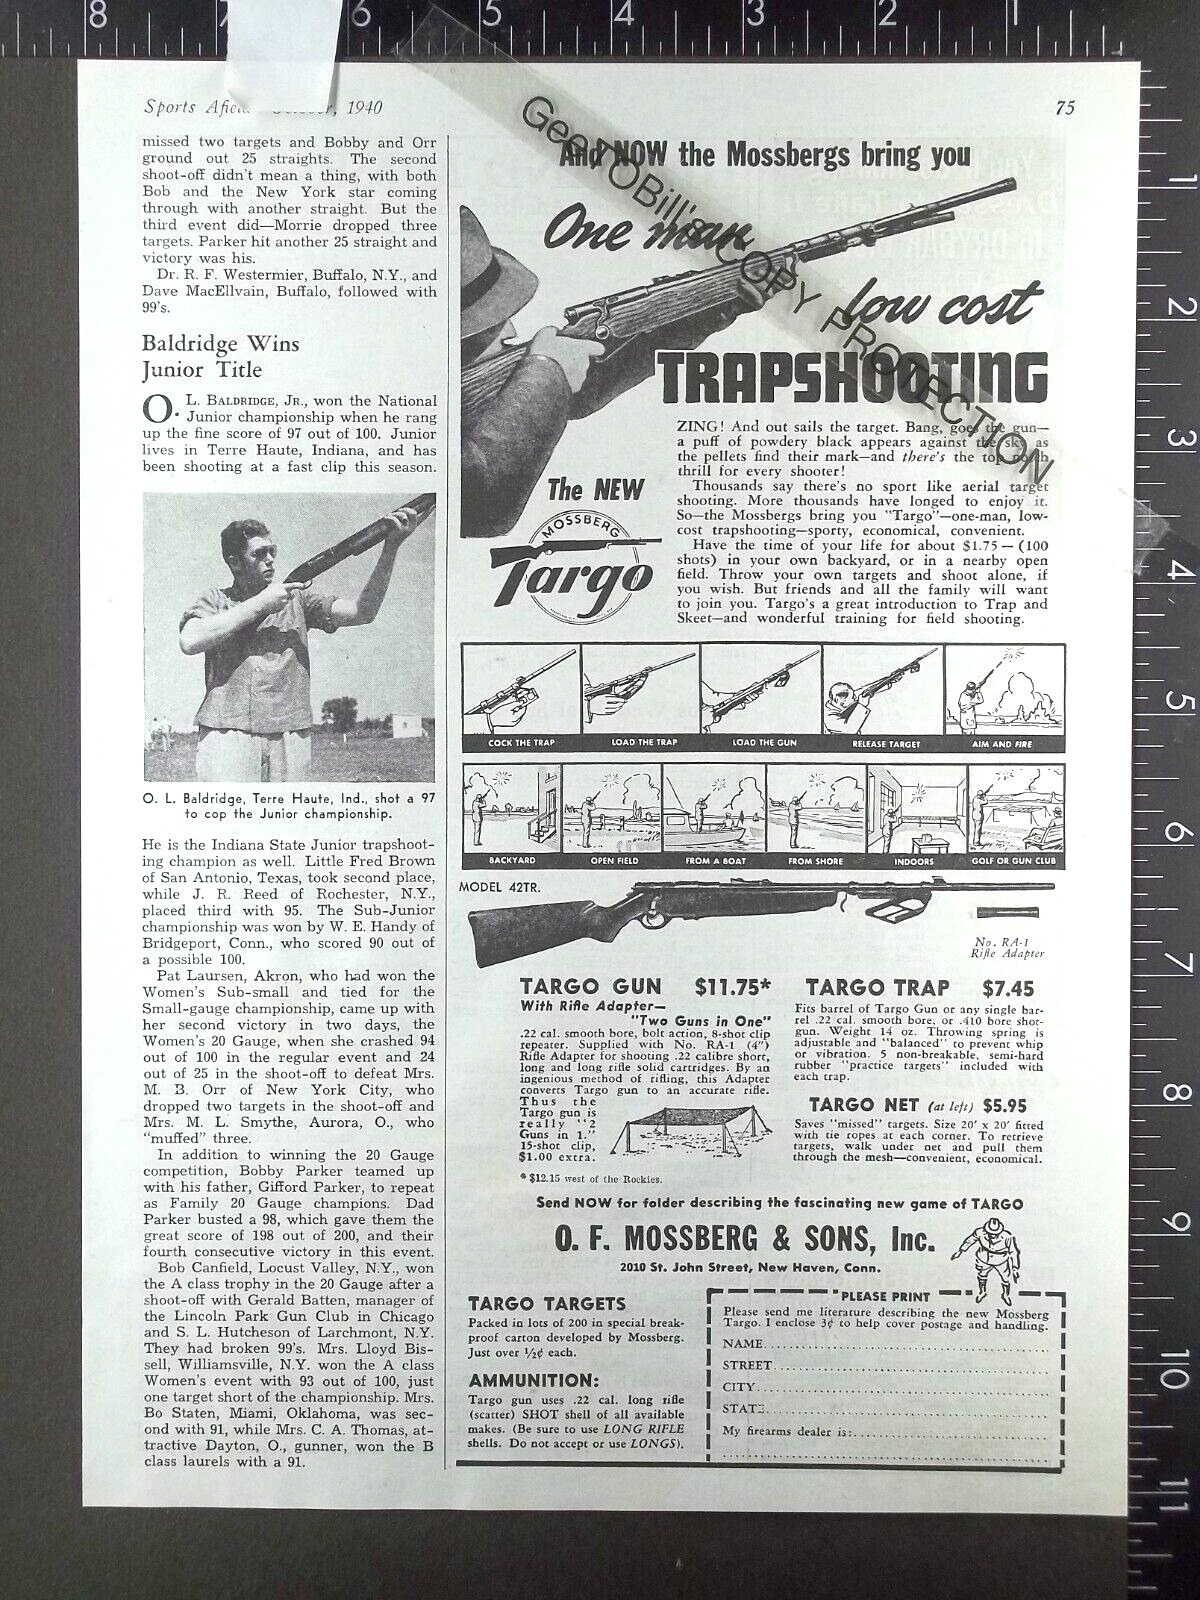 1932 ADVERTISEMENT for O F Mossberg Targo Model 42TR .22 trapshooting rifle